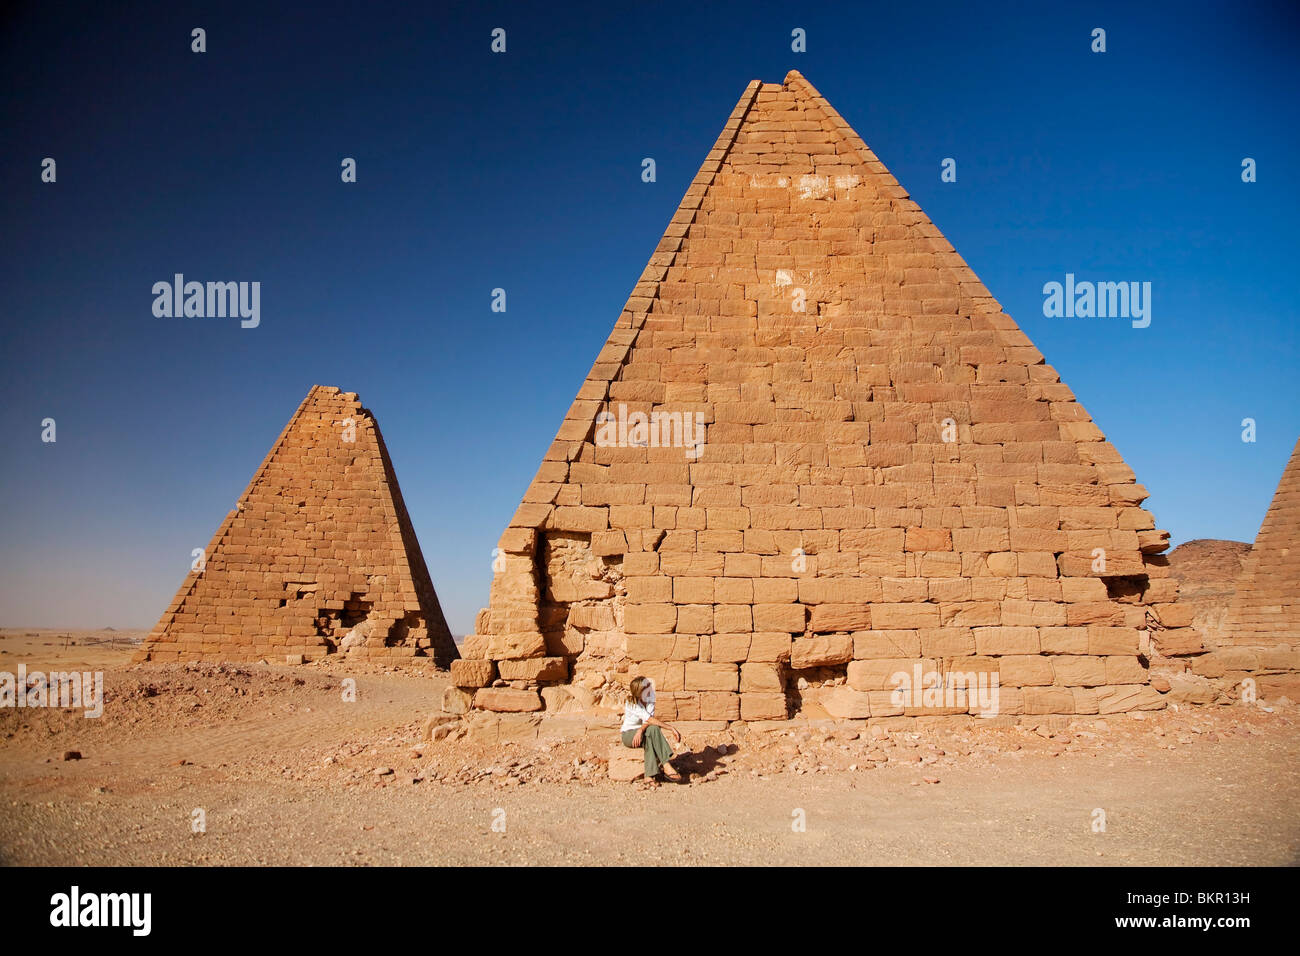 PLAYMOBIL, Mystery of the Pyramid, Pharaoh in Egypt